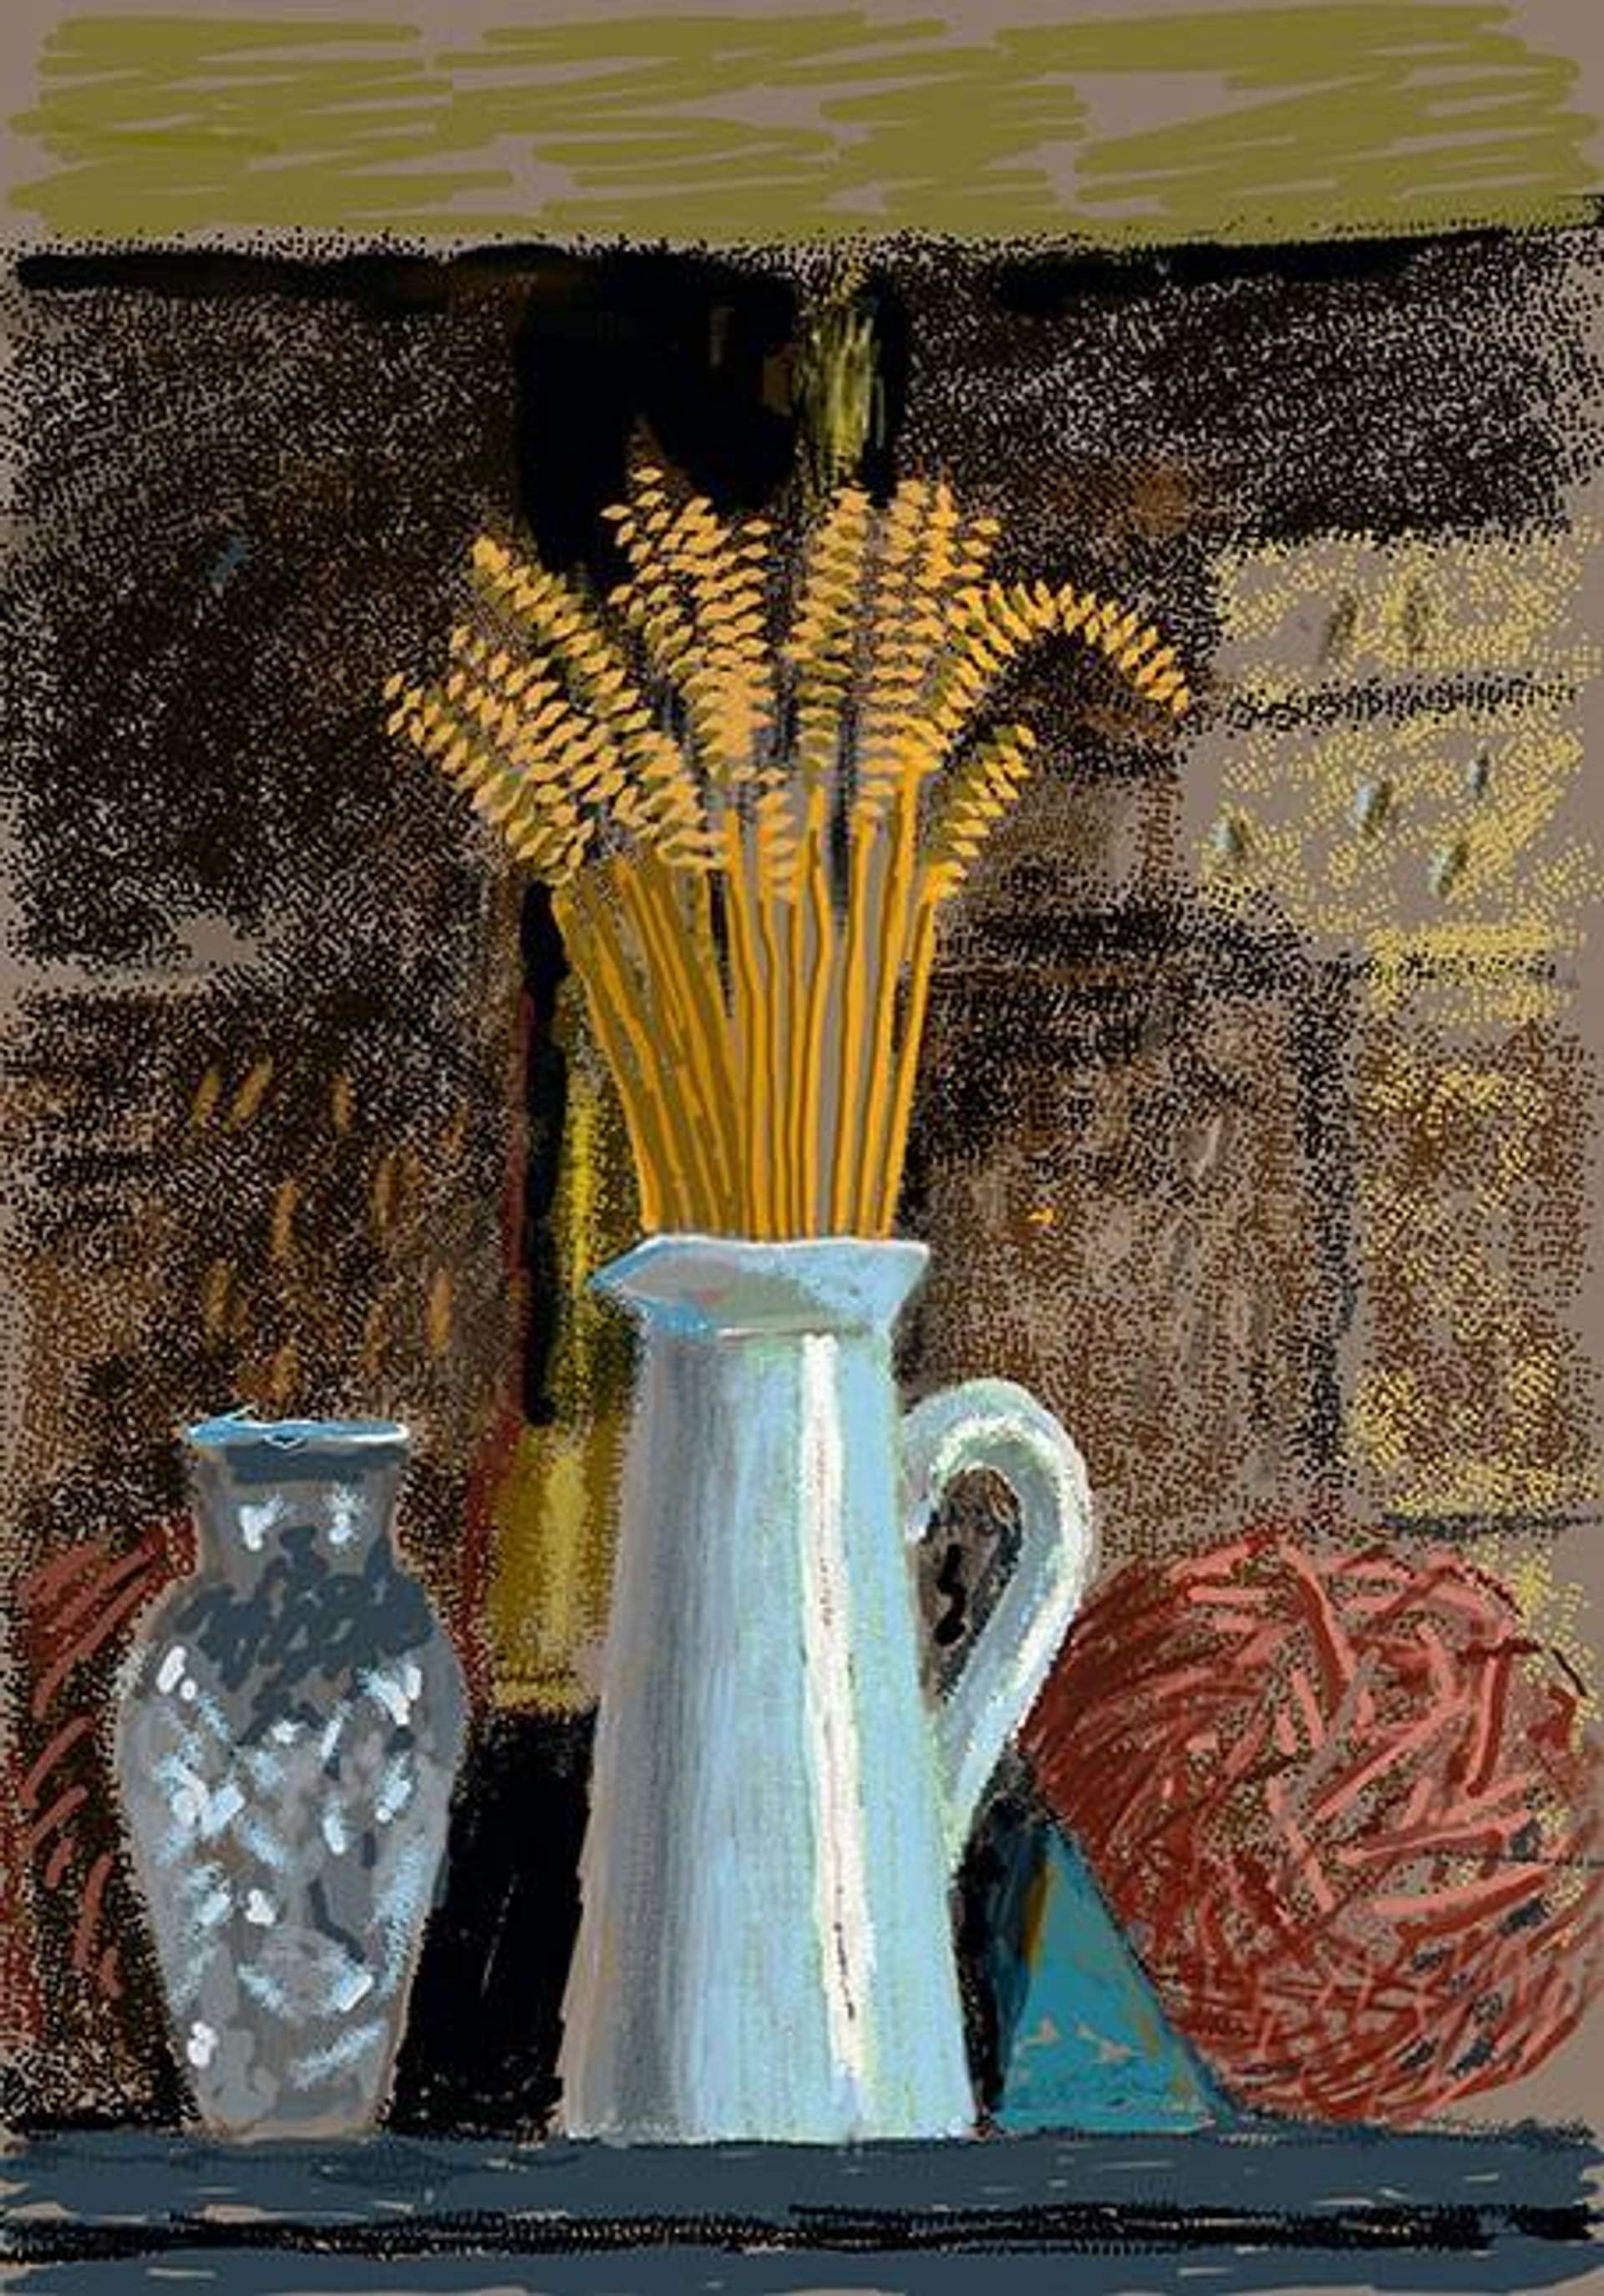 Glass Vase, Jug And Wheat by David Hockney